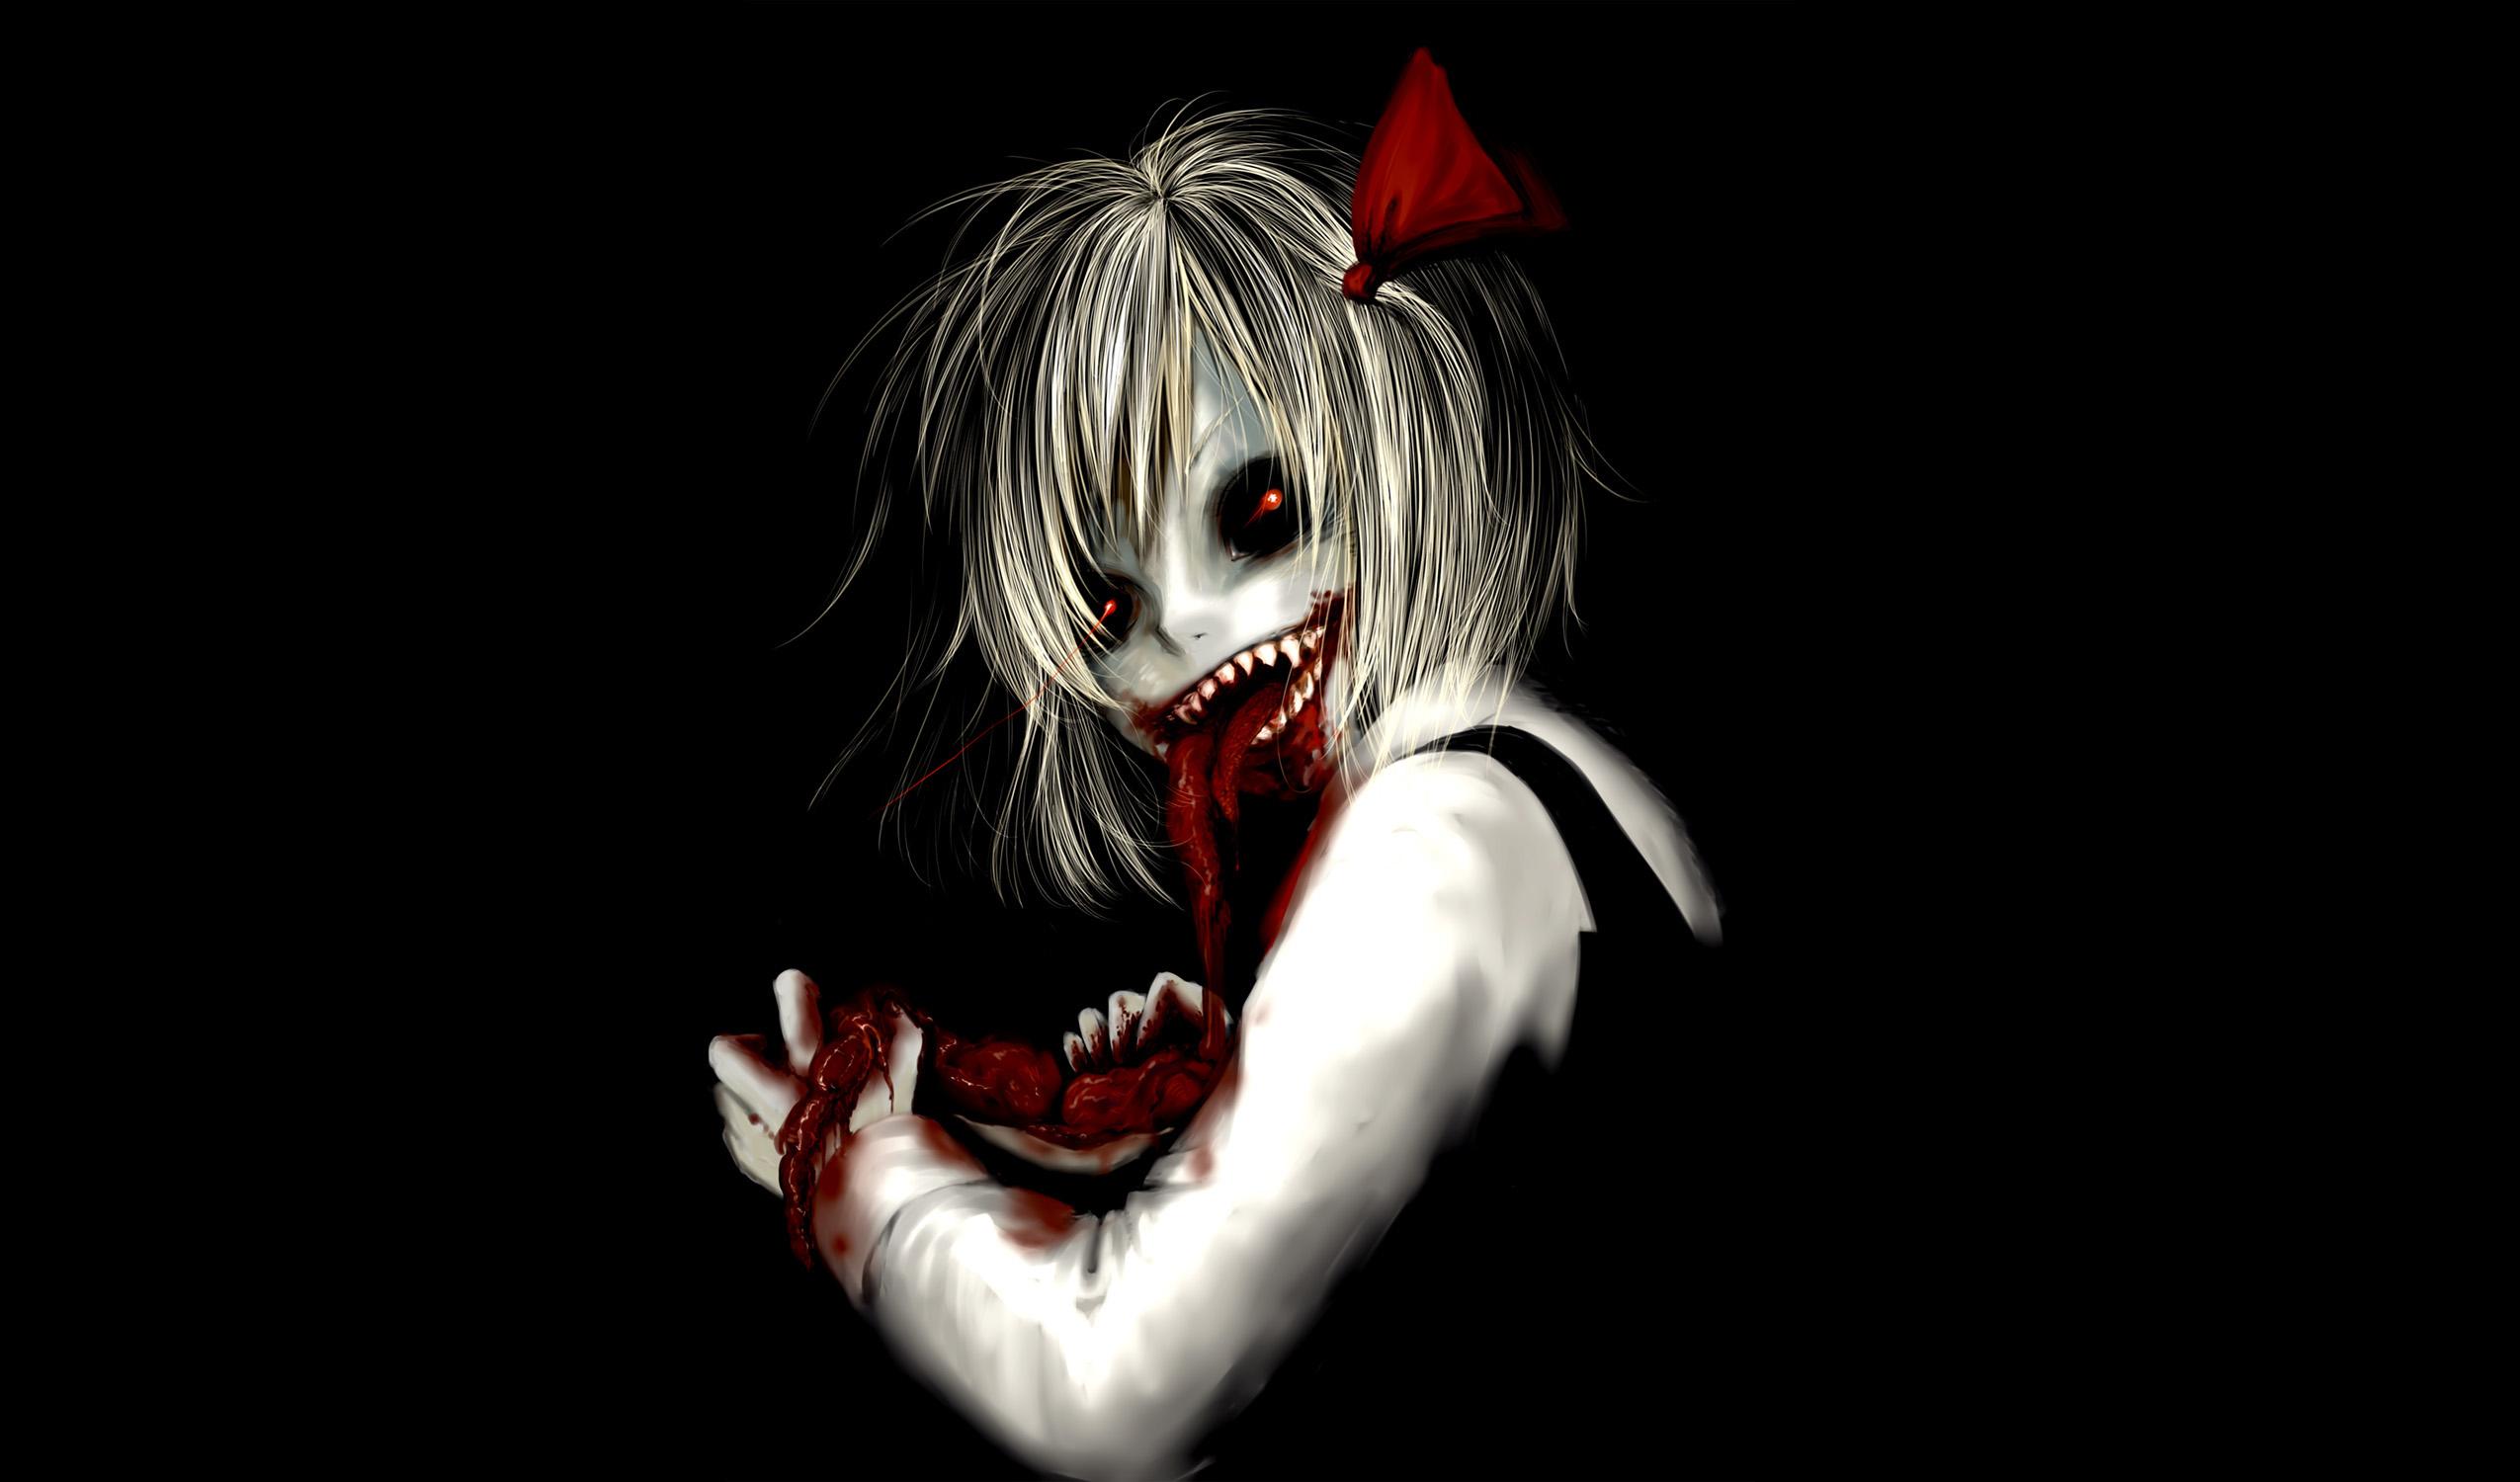 Free download Dark horror anime macabre blood guts evil girl